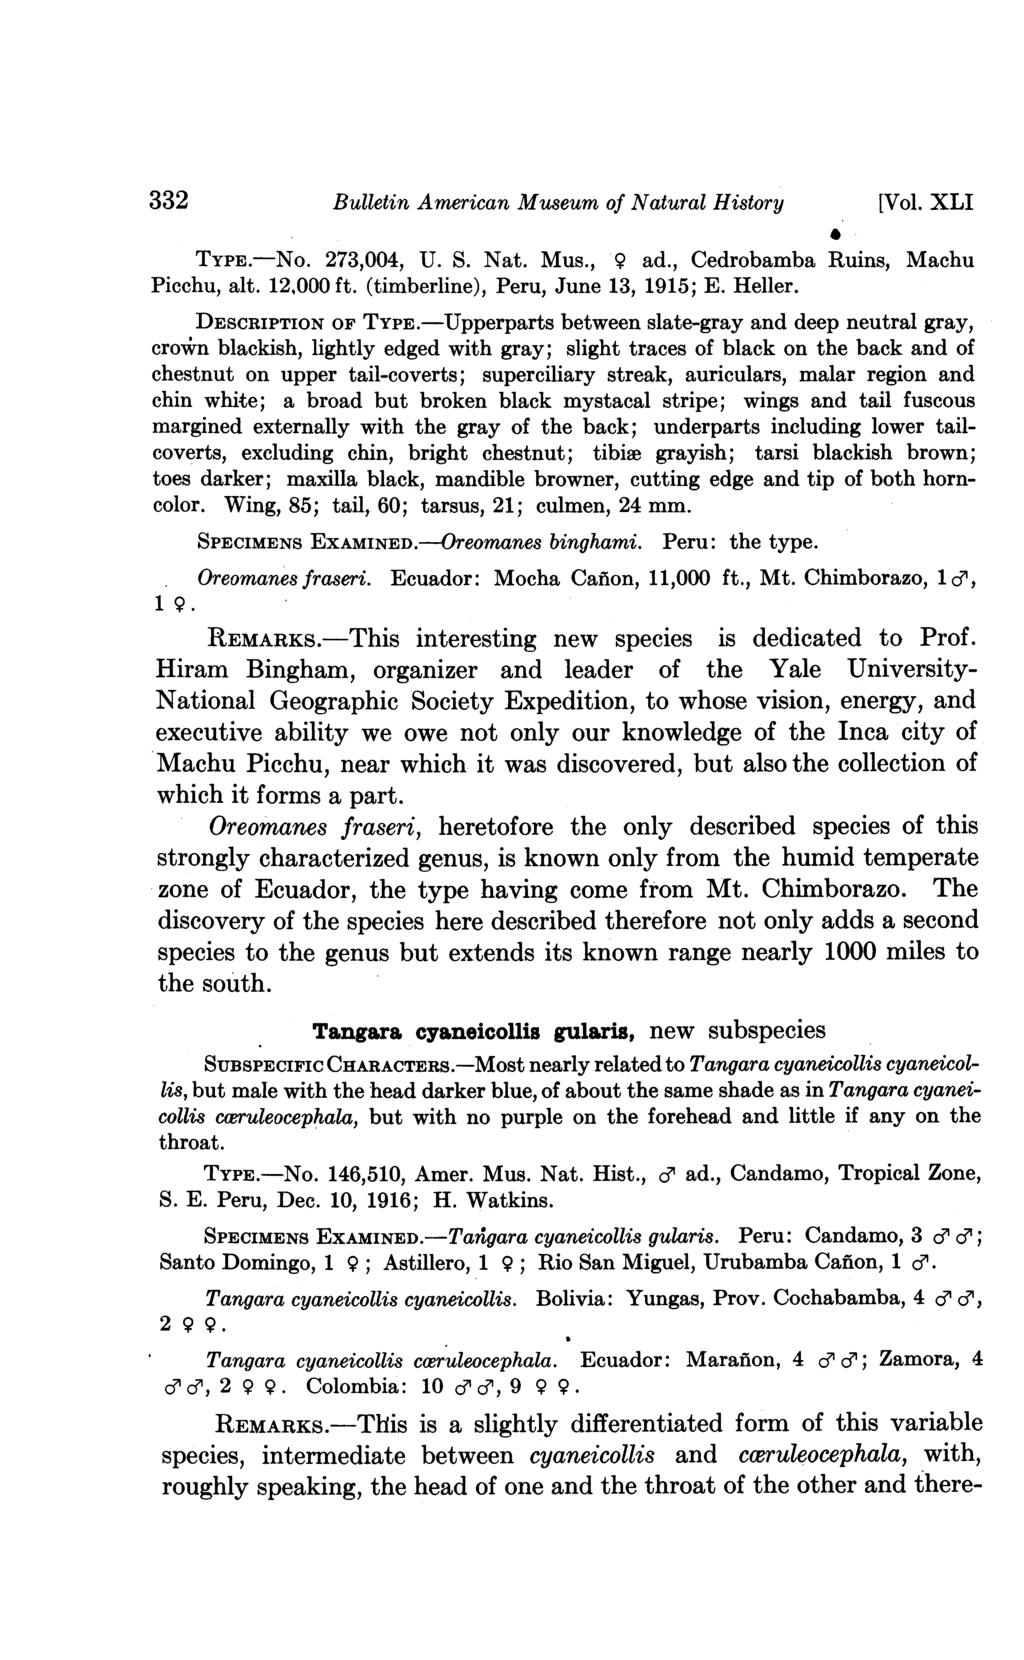 332 Bulletin American Museum of Natural History [Vol. XLI TYPE.-NO. 273,004, U. S. Nat. Mus., 9 ad., Cedrobamba Ruins, Machu Picchu, alt. 12,000 ft. (timberline), Peru, June 13, 1915; E. Heller.